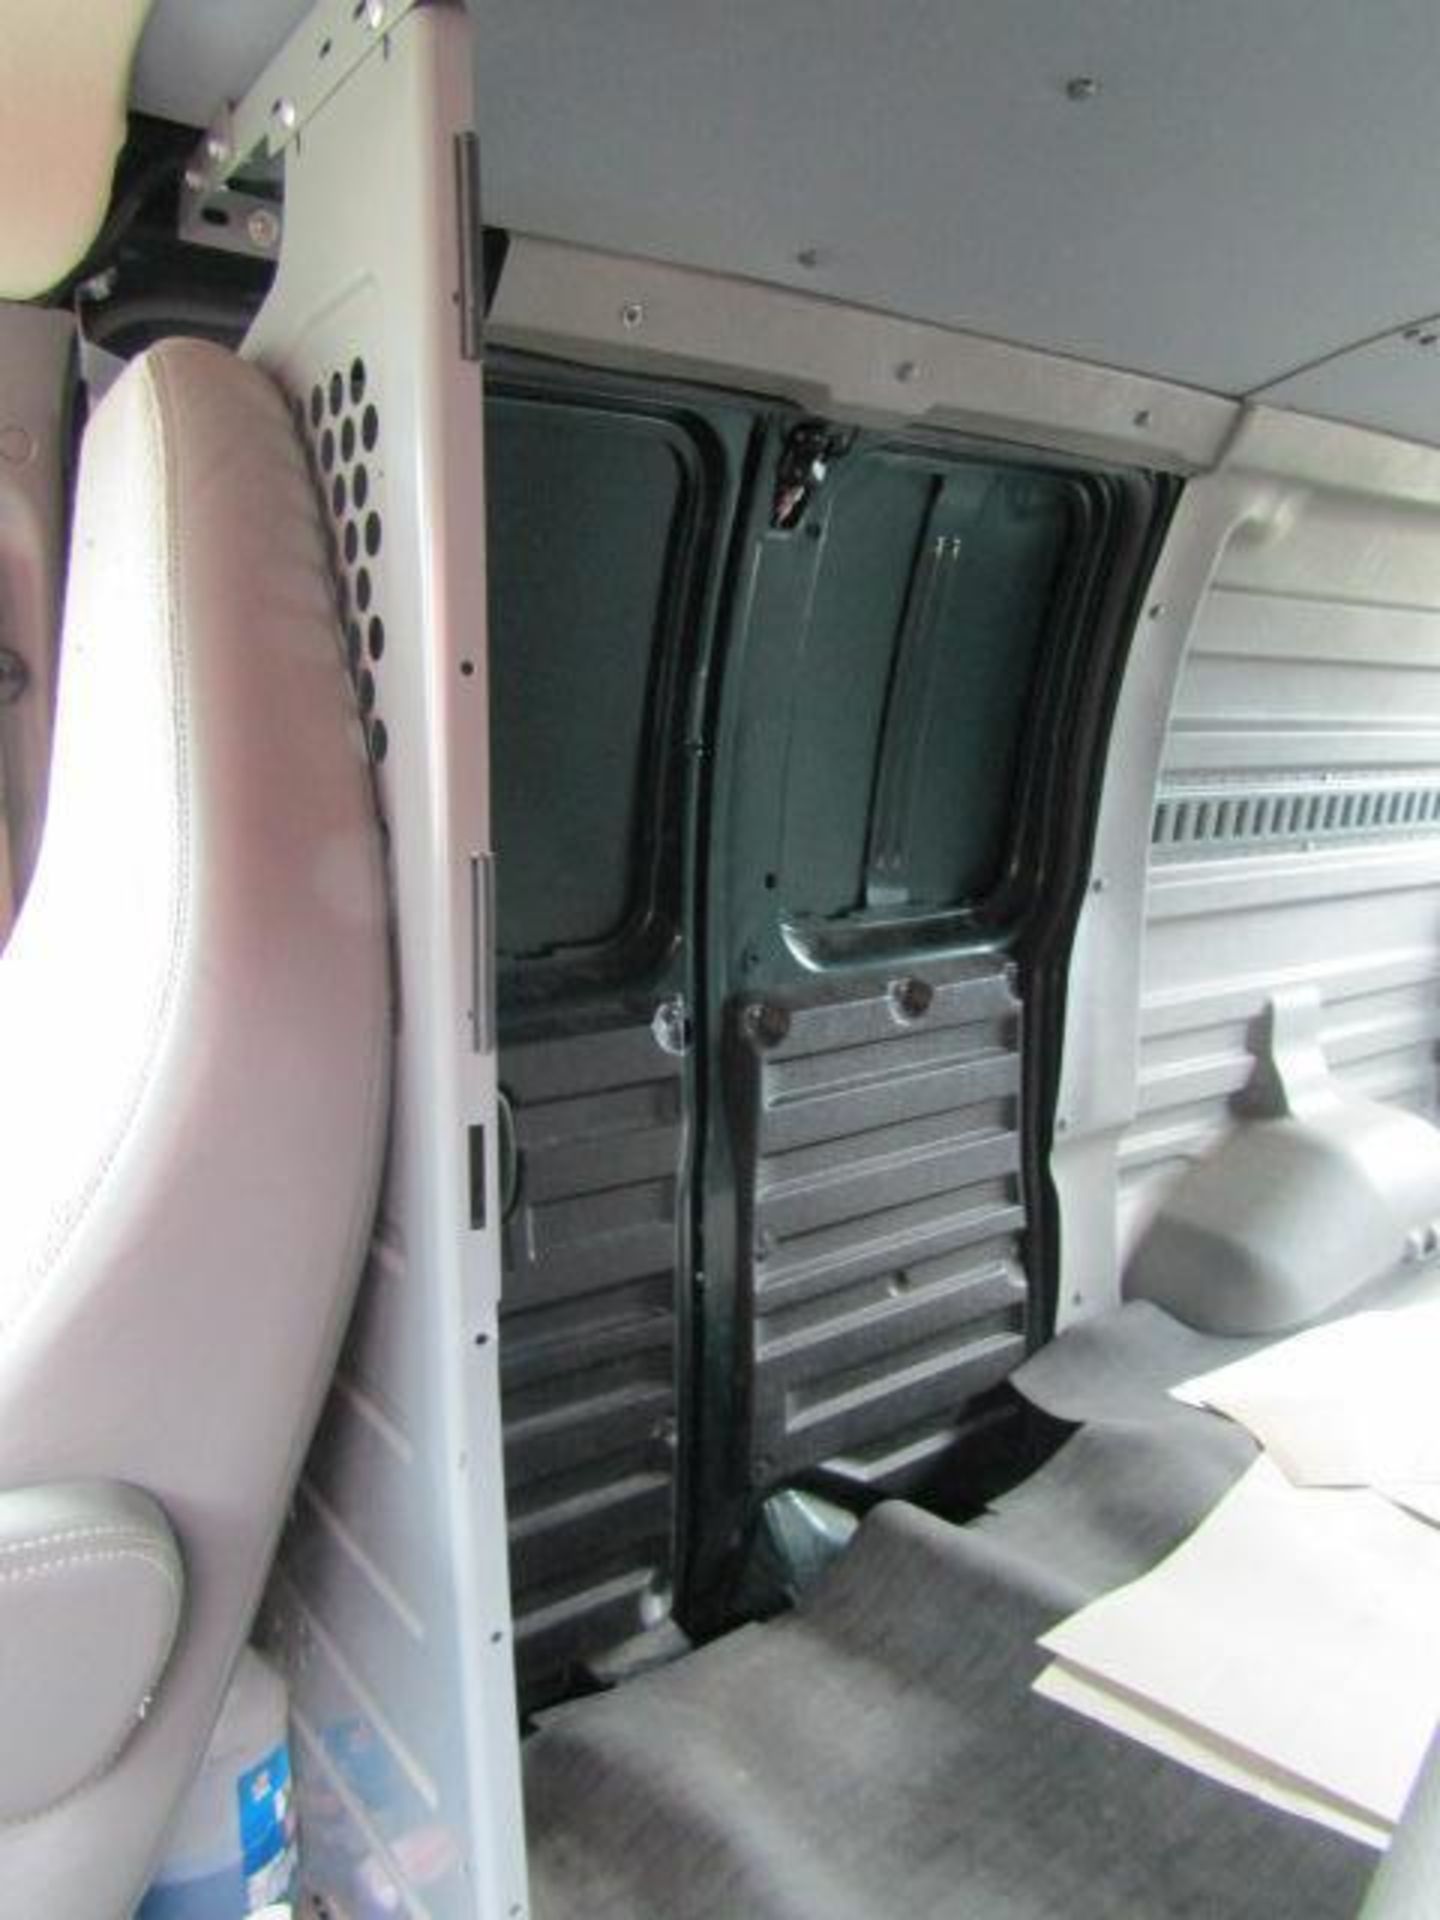 2014 Chevrolet Express Van Model G13405, VIN 1GCSGAFX1E1134256, Rubber Mats, Front Seat Partition to - Image 10 of 14